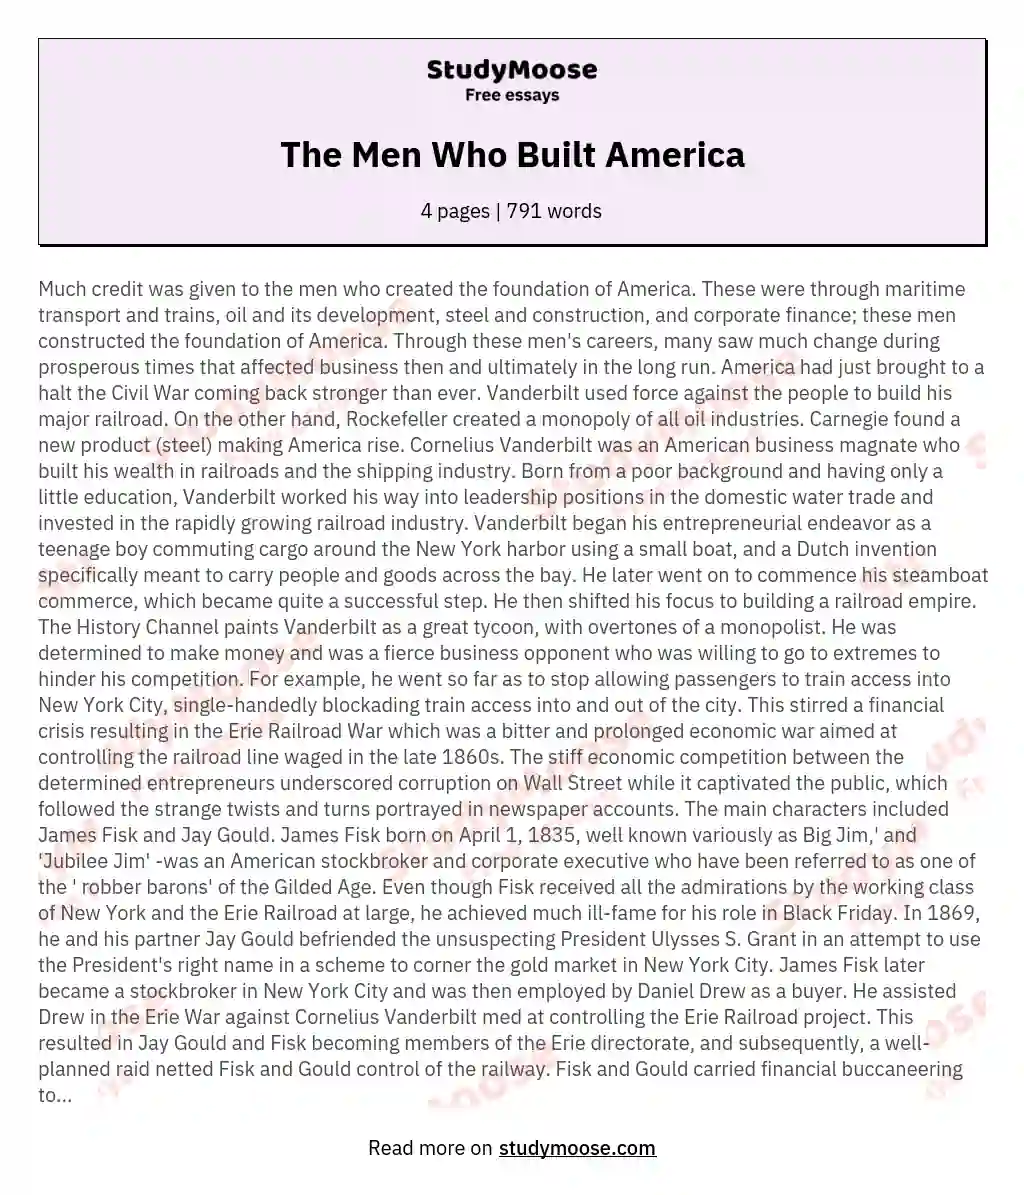 The Men Who Built America essay